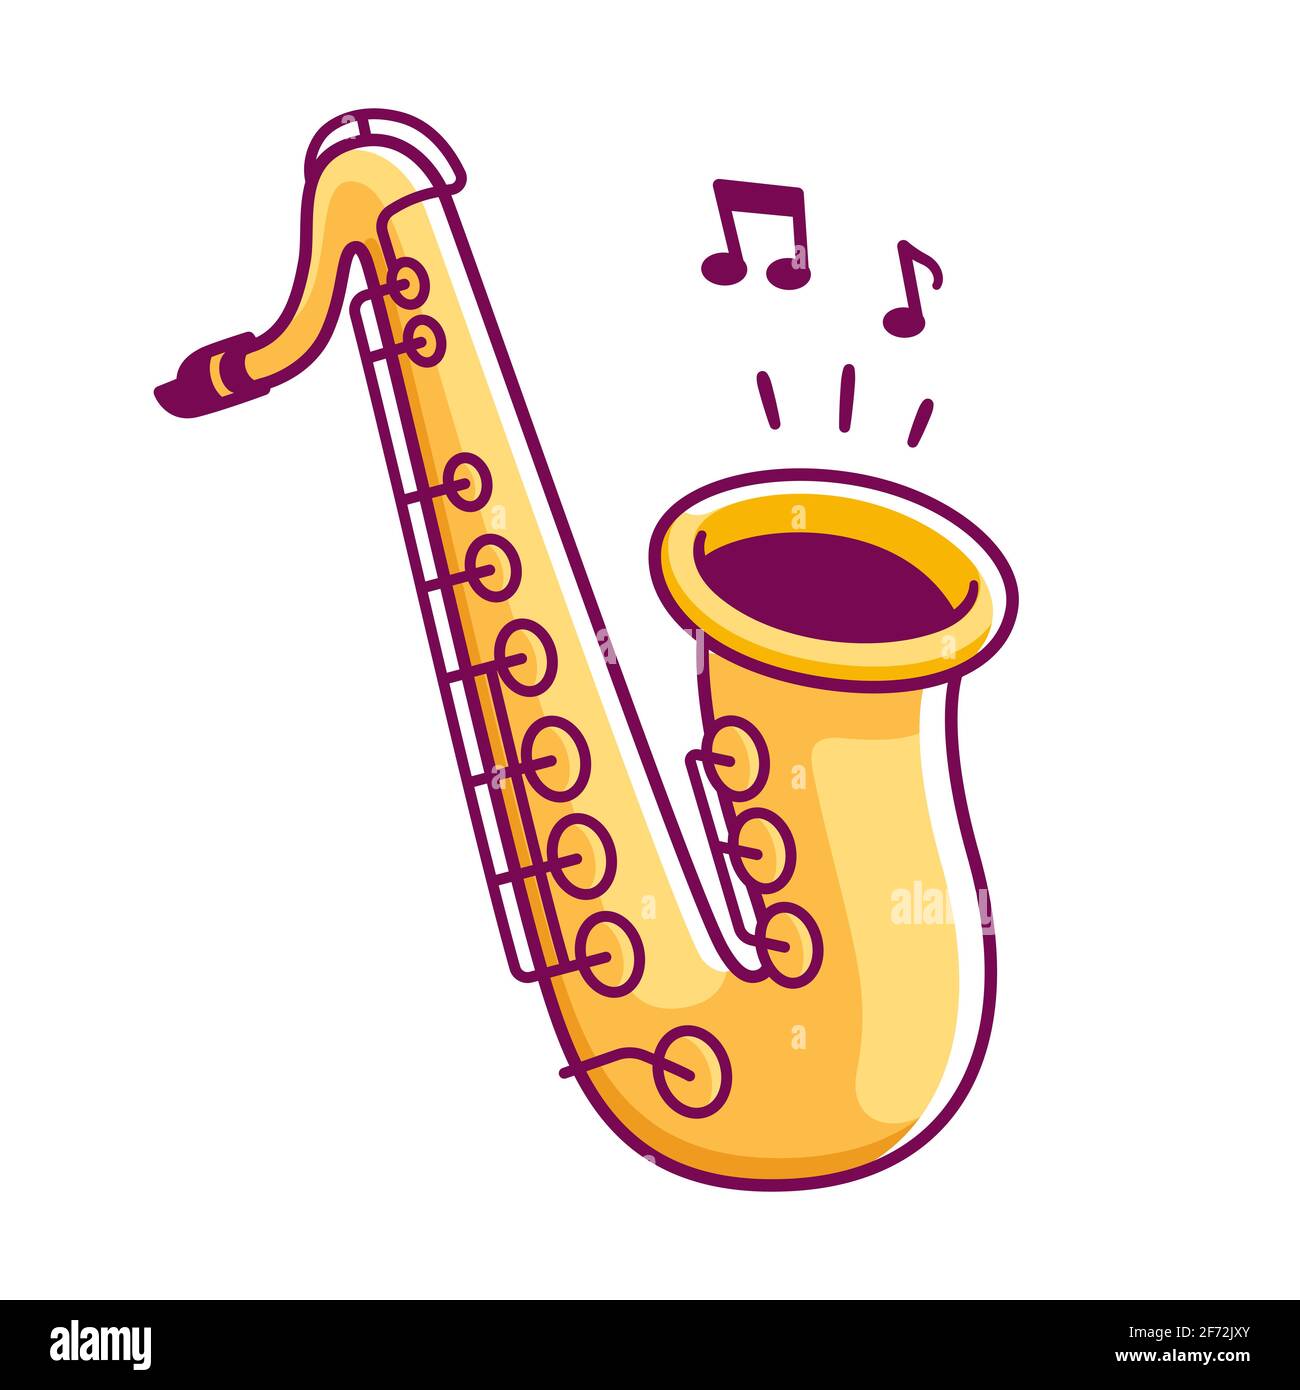 Dibujo saxofón de dibujos animados. Ilustración de clip vectorial aislado  Imagen Vector de stock - Alamy